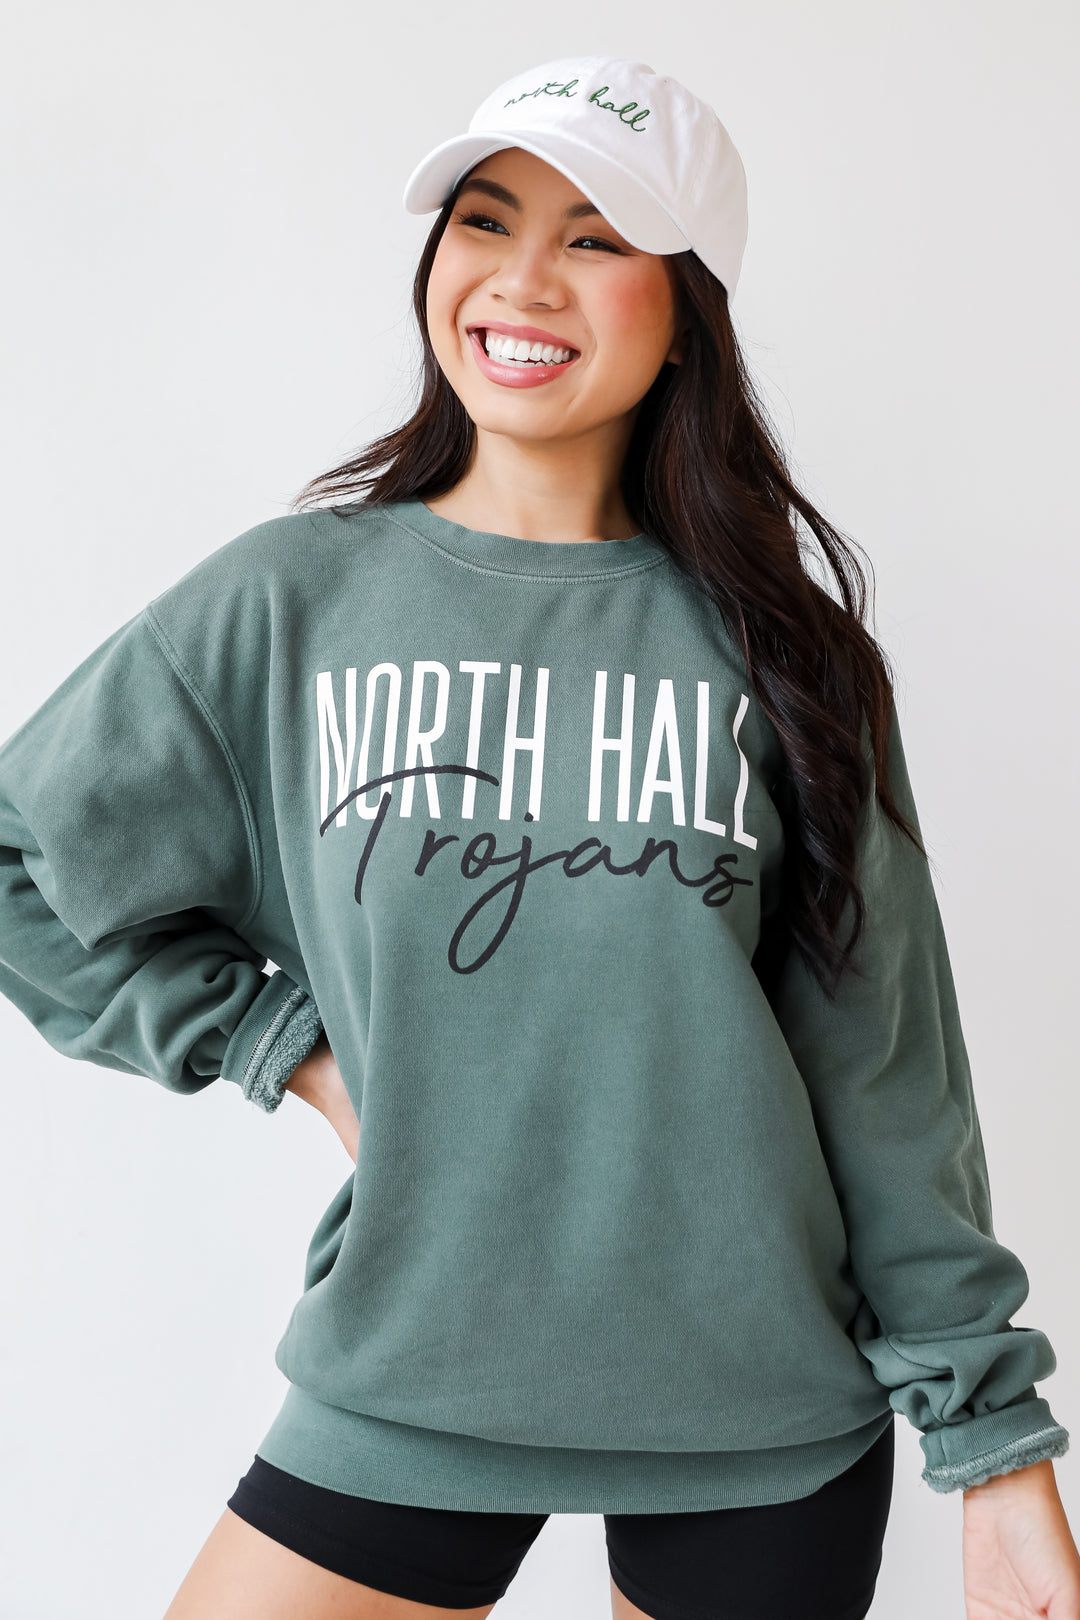 North Hall Trojans Pullover. Graphic Sweatshirt. North Hall Game Day Sweatshirt